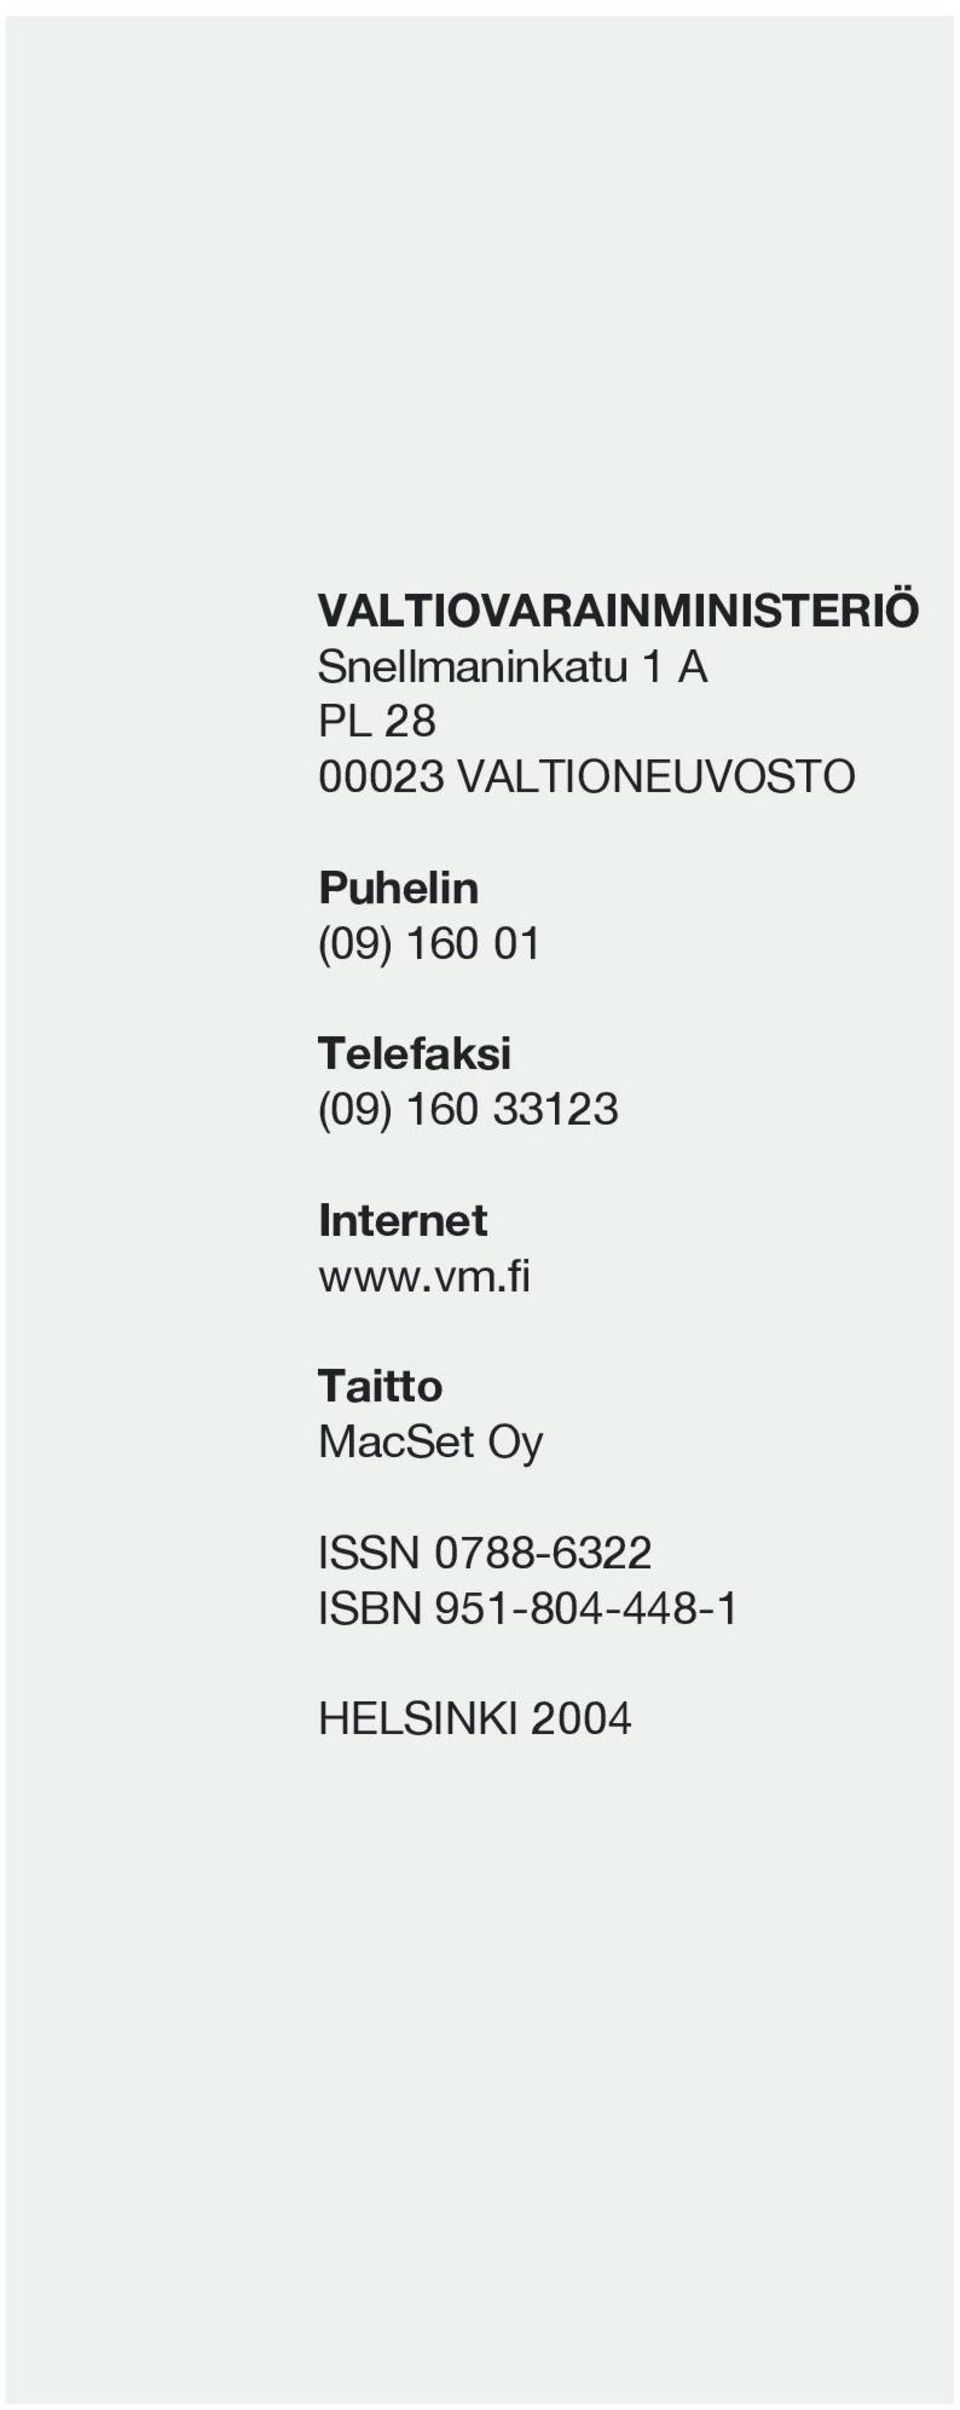 Telefaksi (09) 160 33123 Internet www.vm.